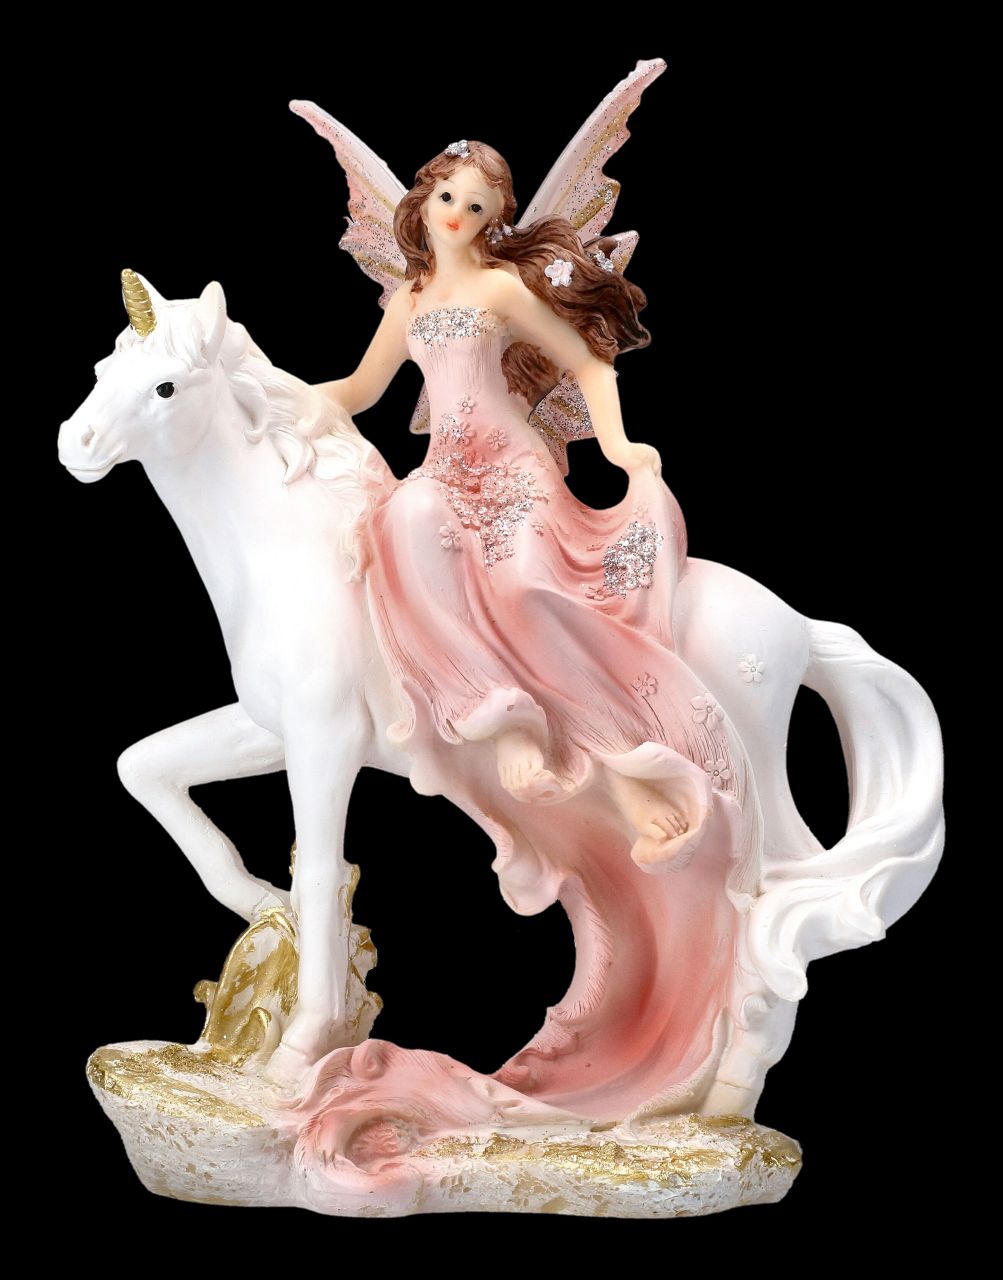 Fairy Figurine Riding a Unicorn - Old Rose Small